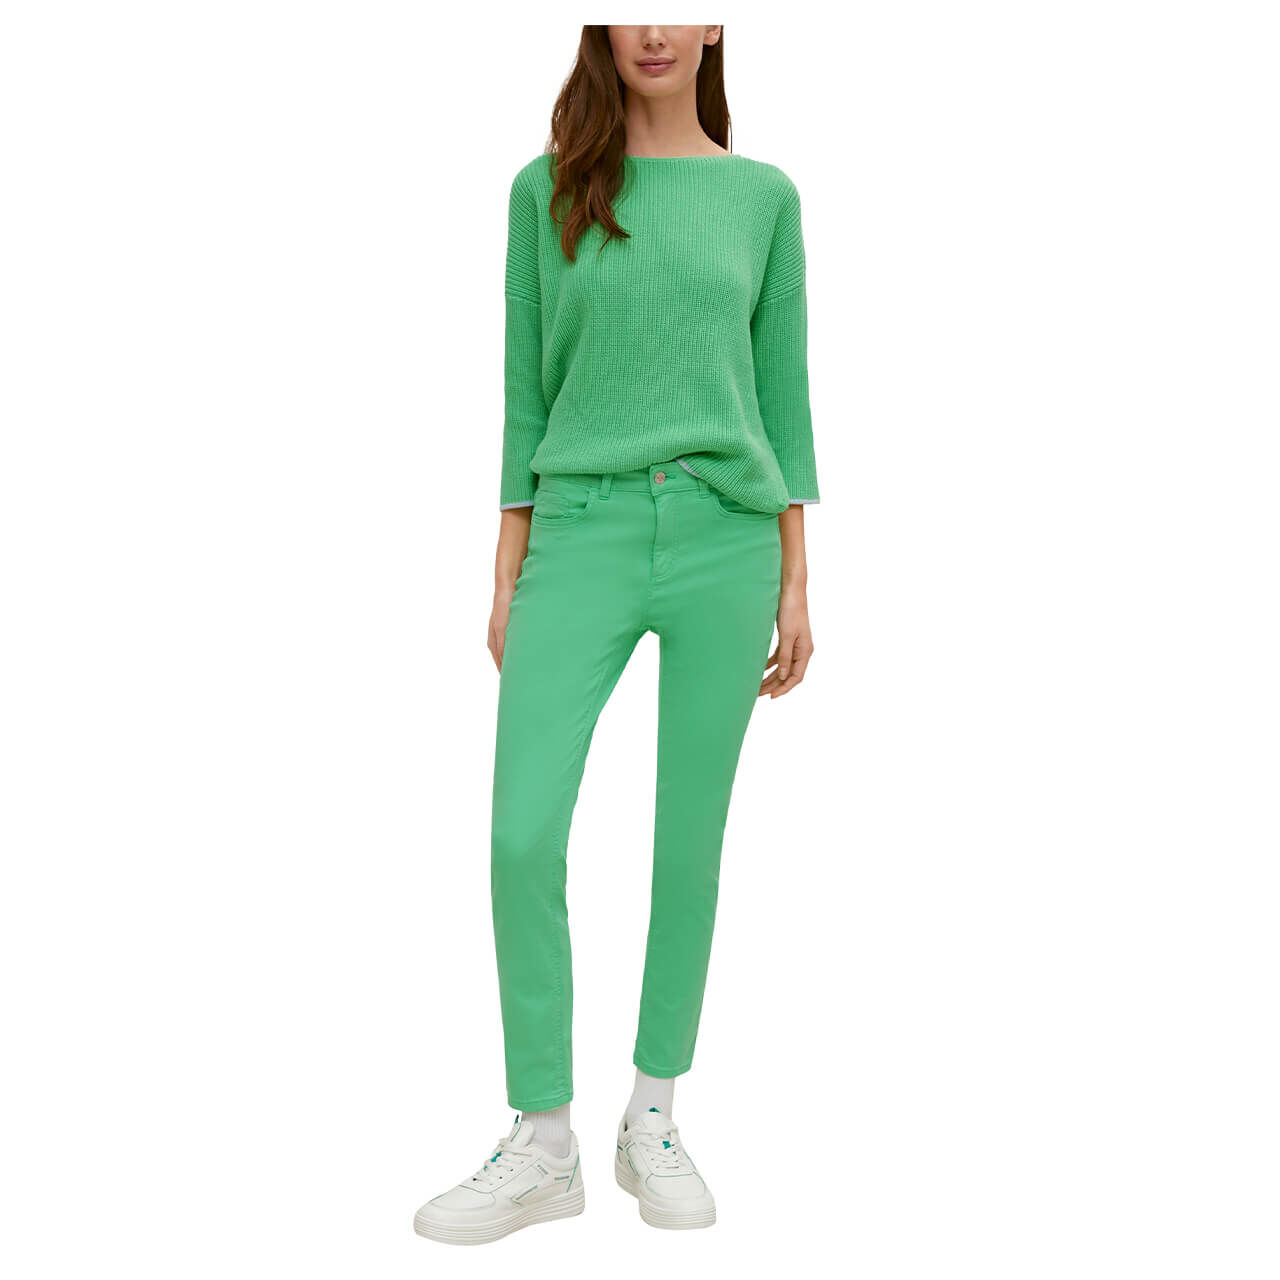 Comma Damen 3/4 Arm Pullover juicy green